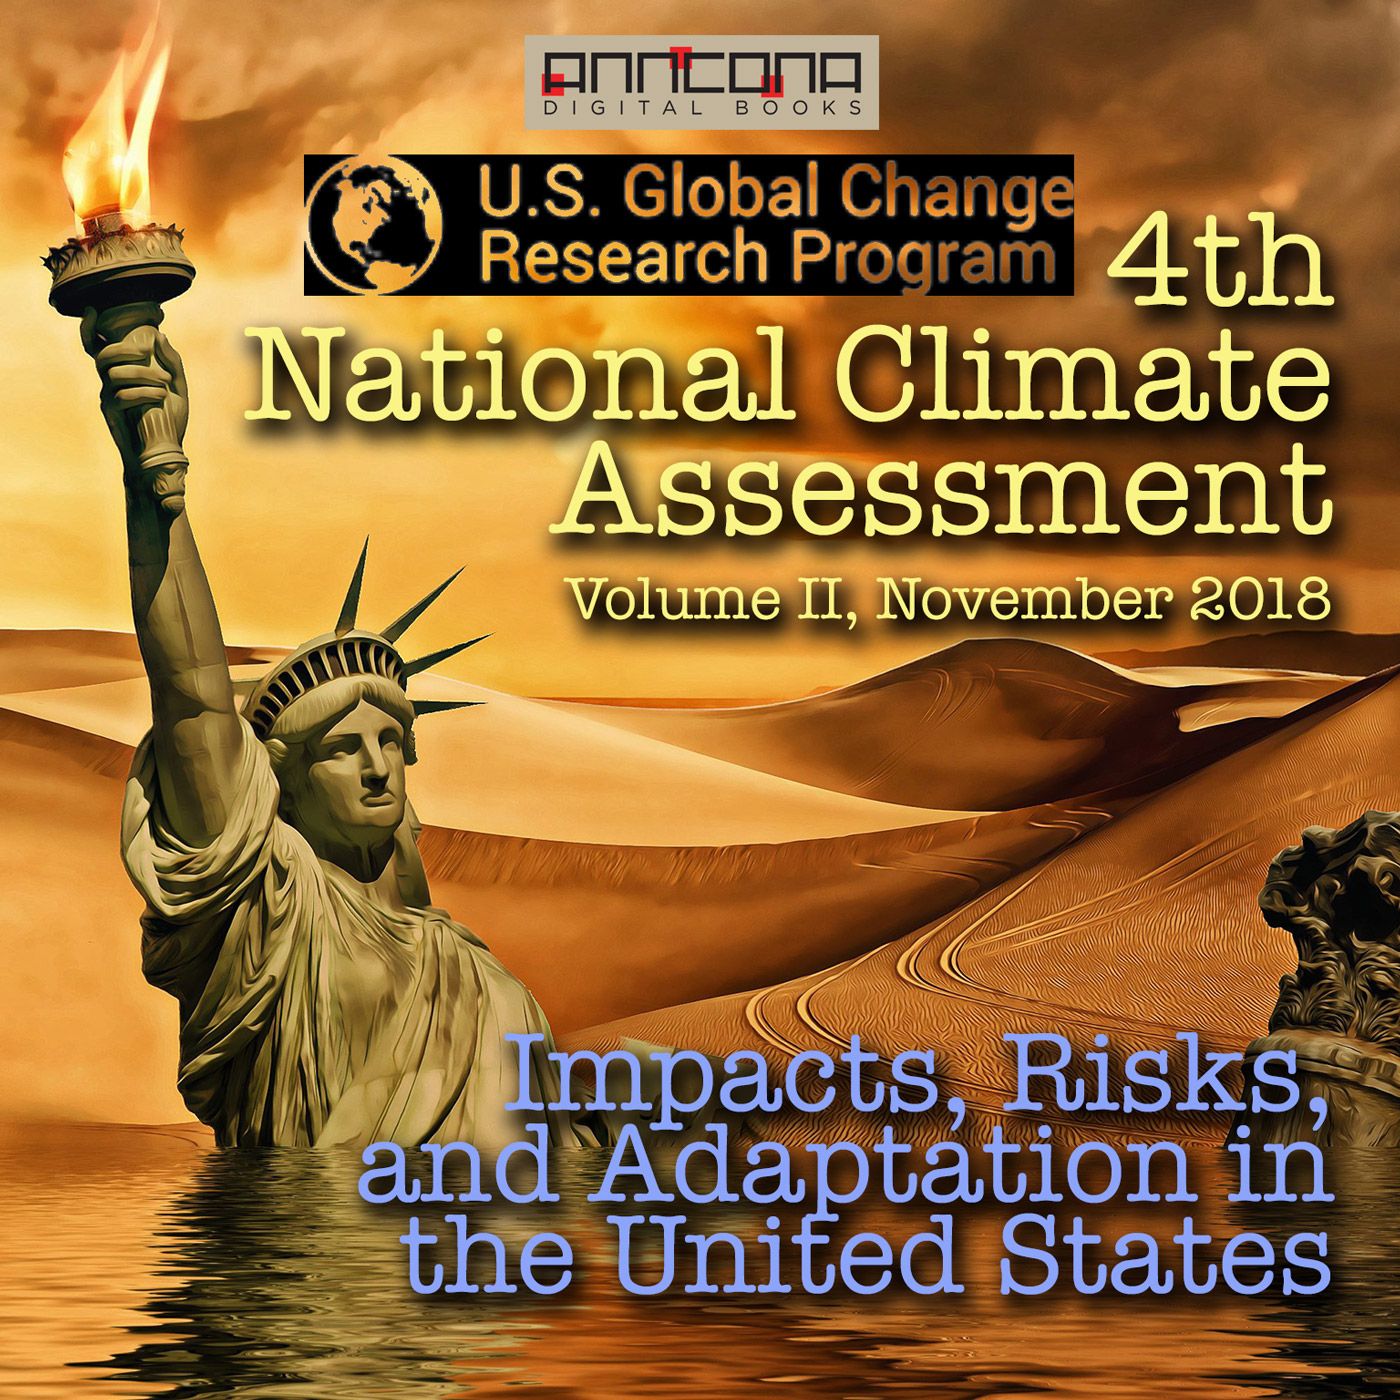 4th National Climate Assessment, Volume II, ljudbok av U.S. Global Change Research Program